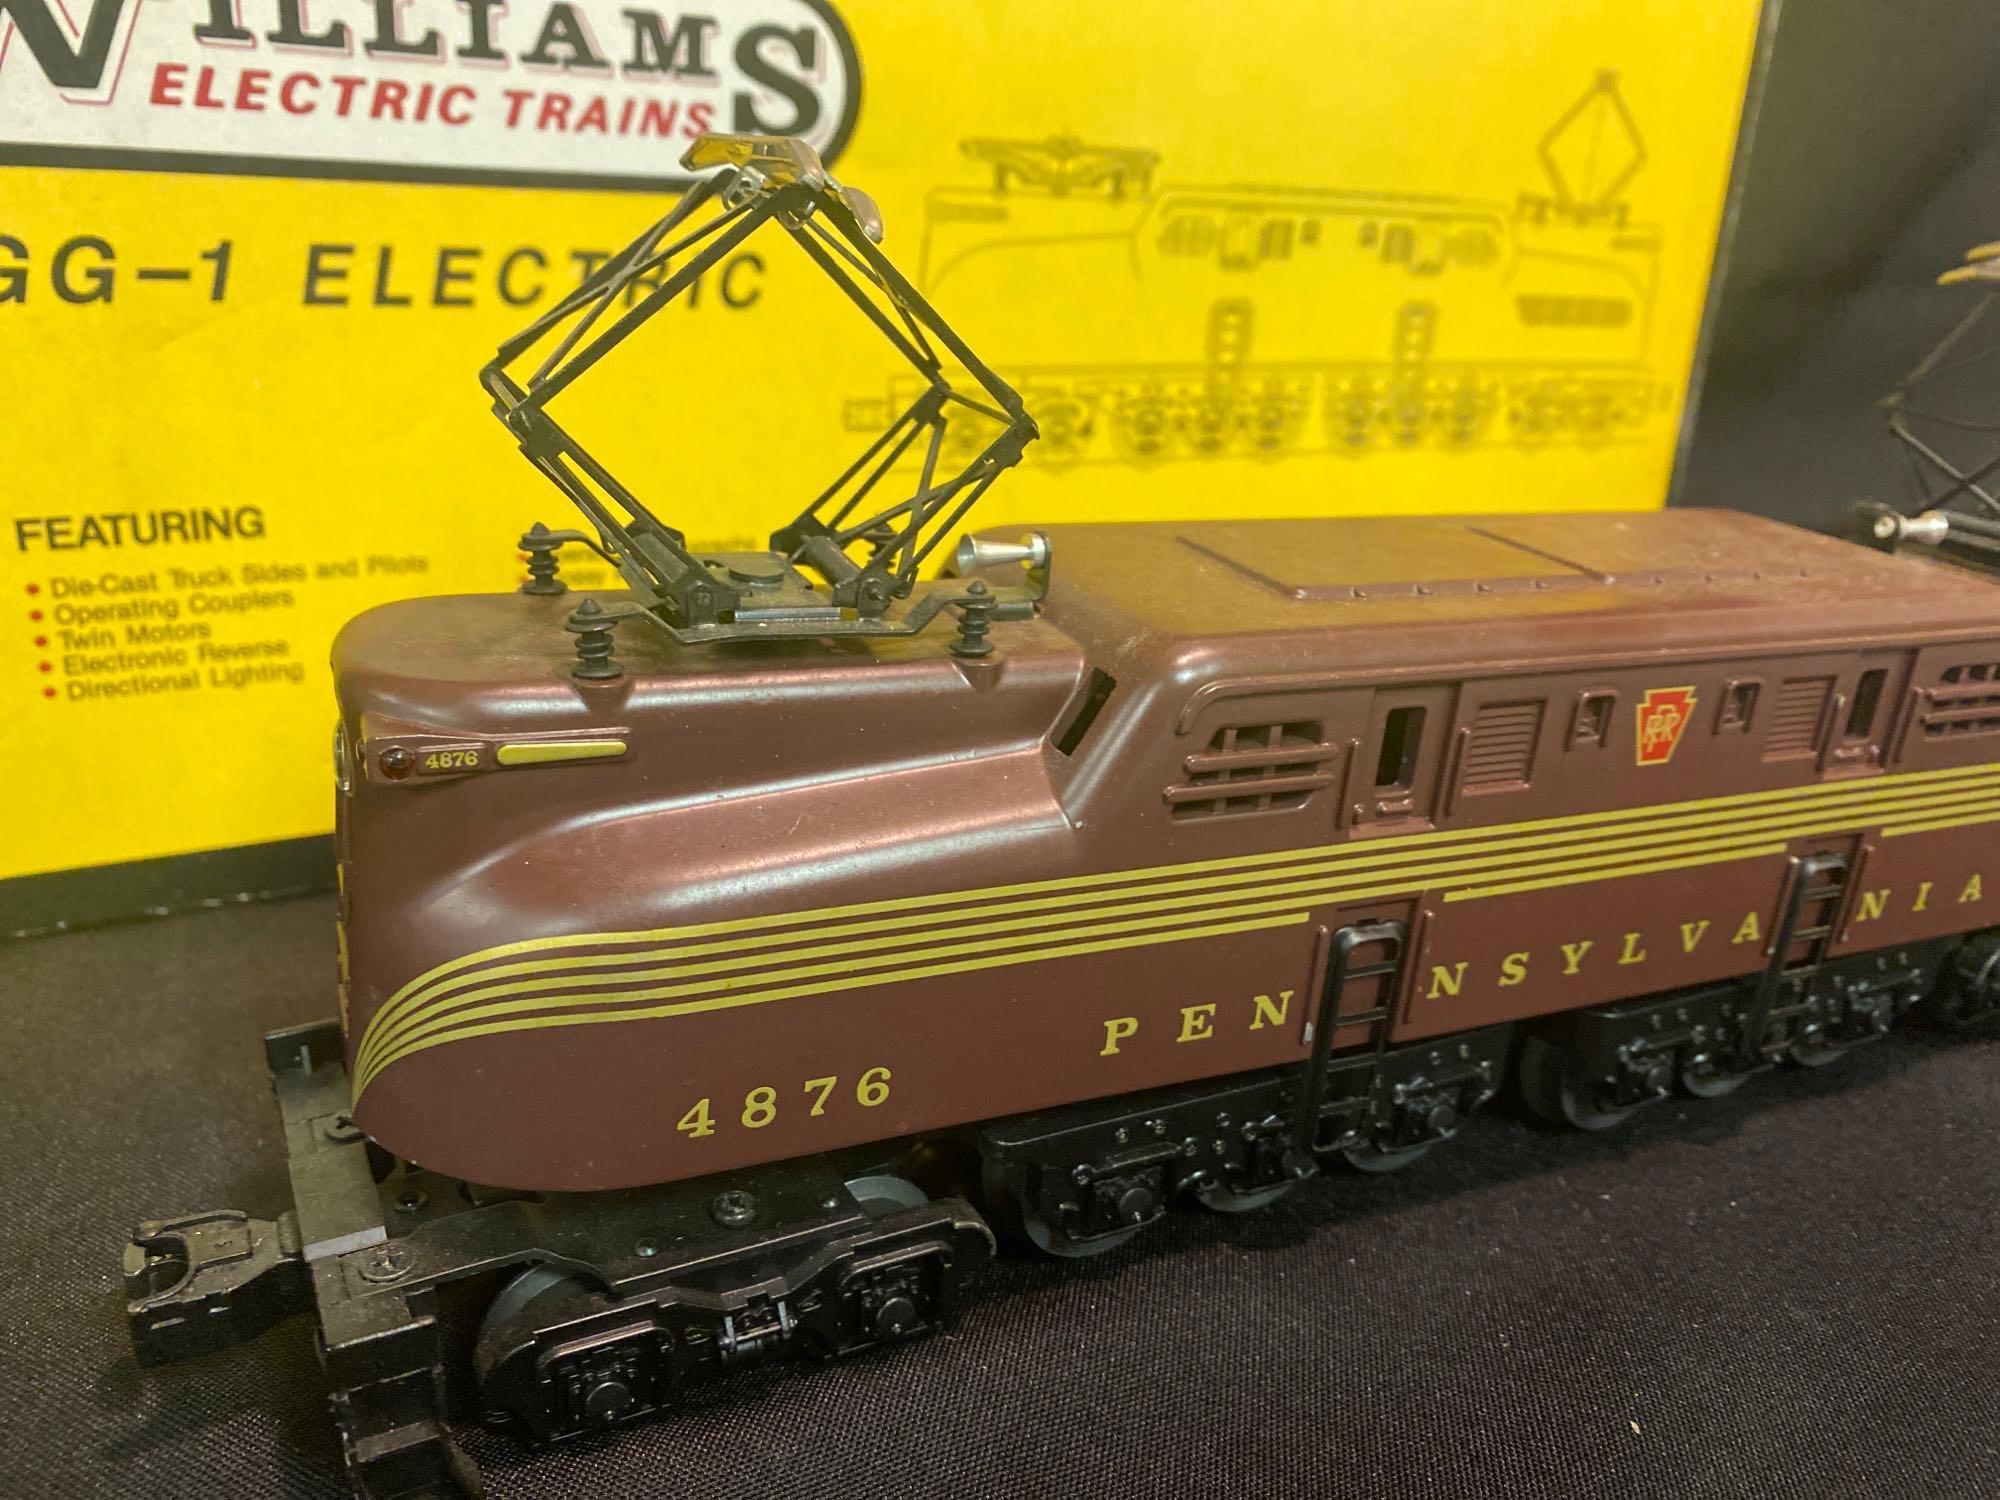 Willams GG-1 Electric Locomotive